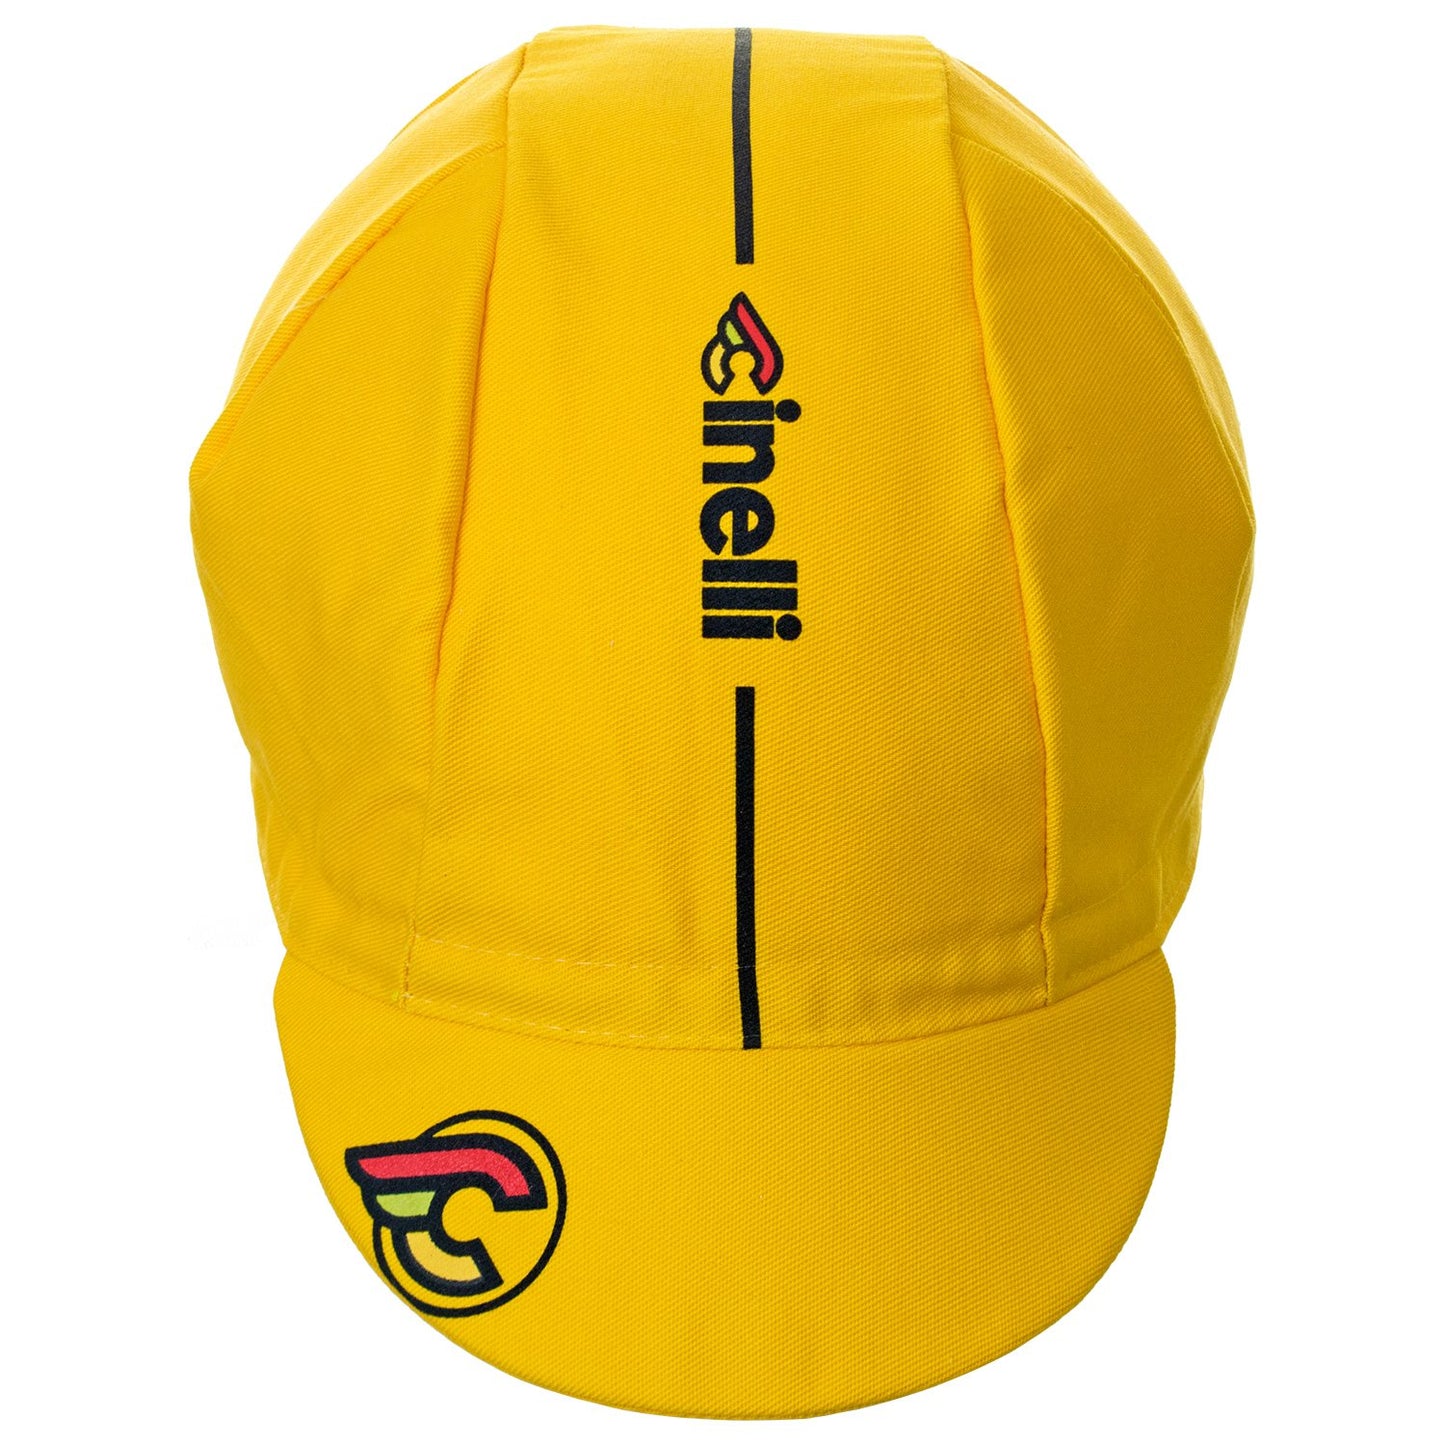 CINELLI Supercorsa Cycling Cap - Yellow